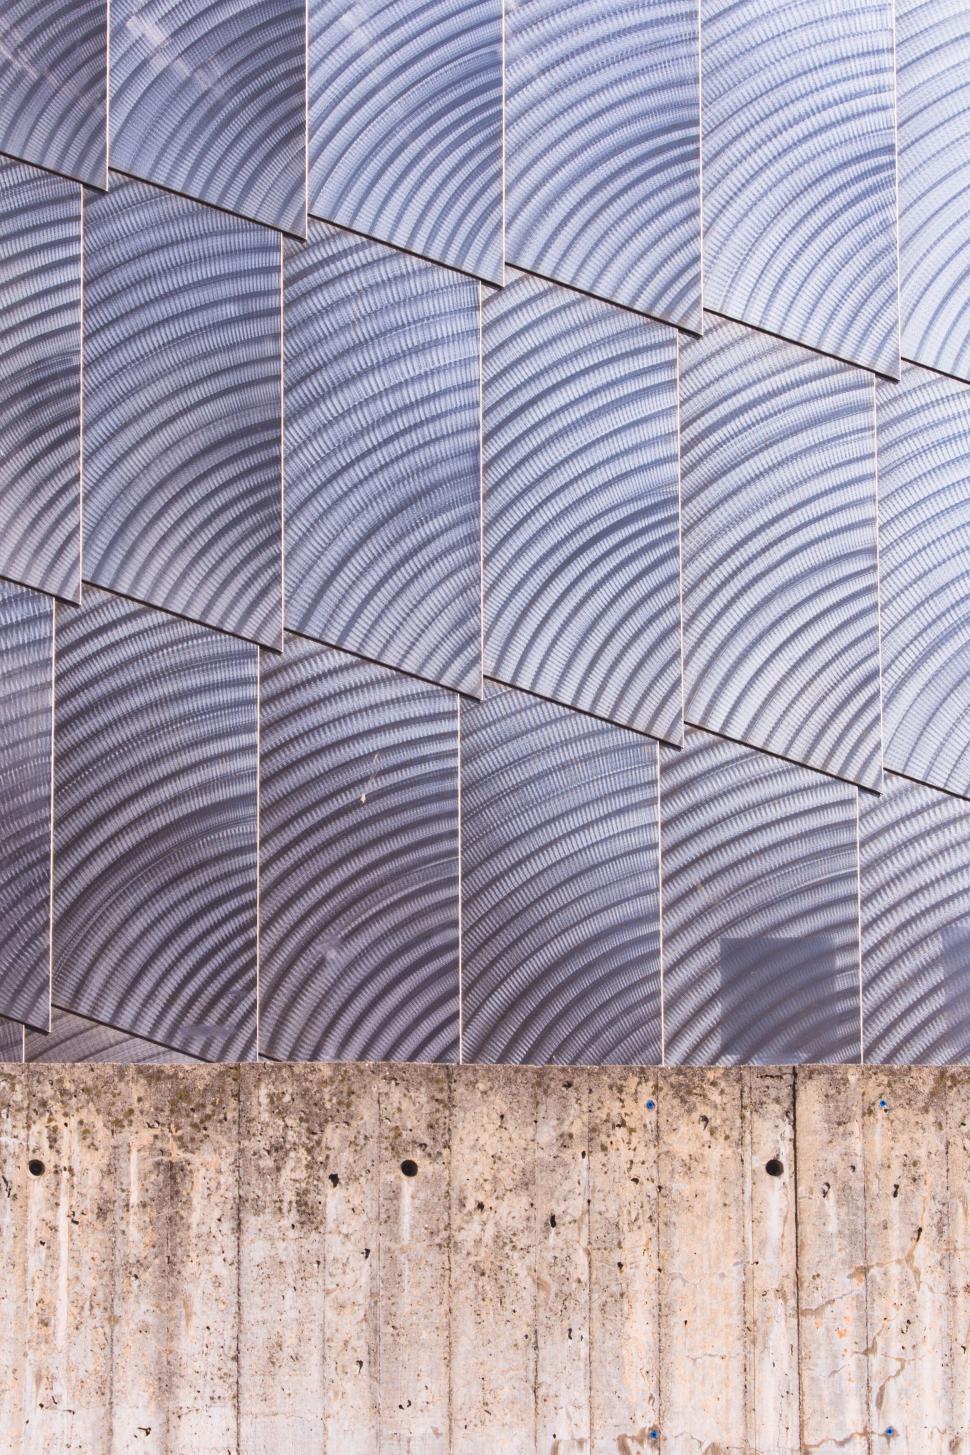 Free Image of Textured wall of metallic tiles pattern 